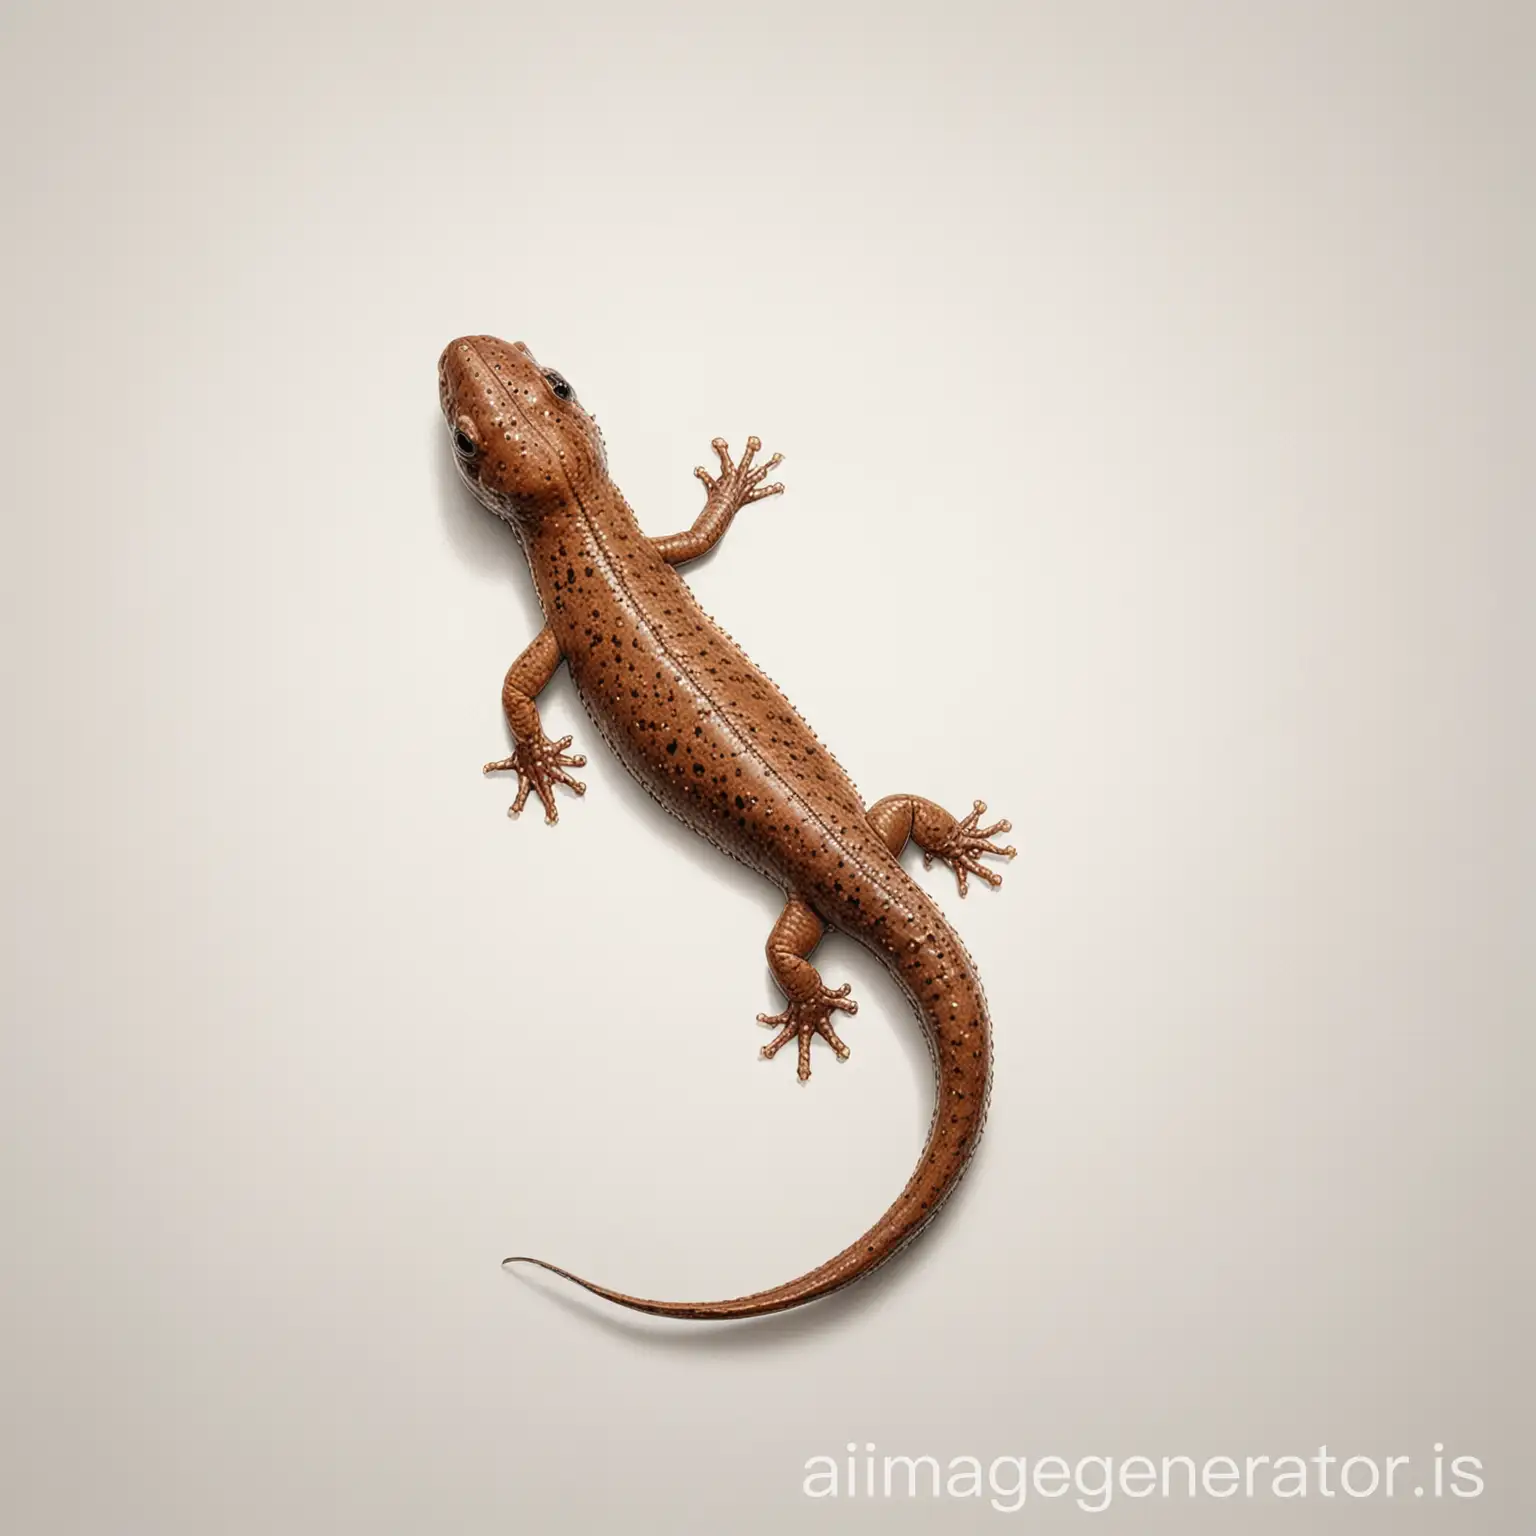 A brown  long salamander, swimming upwards, white background, drawing

